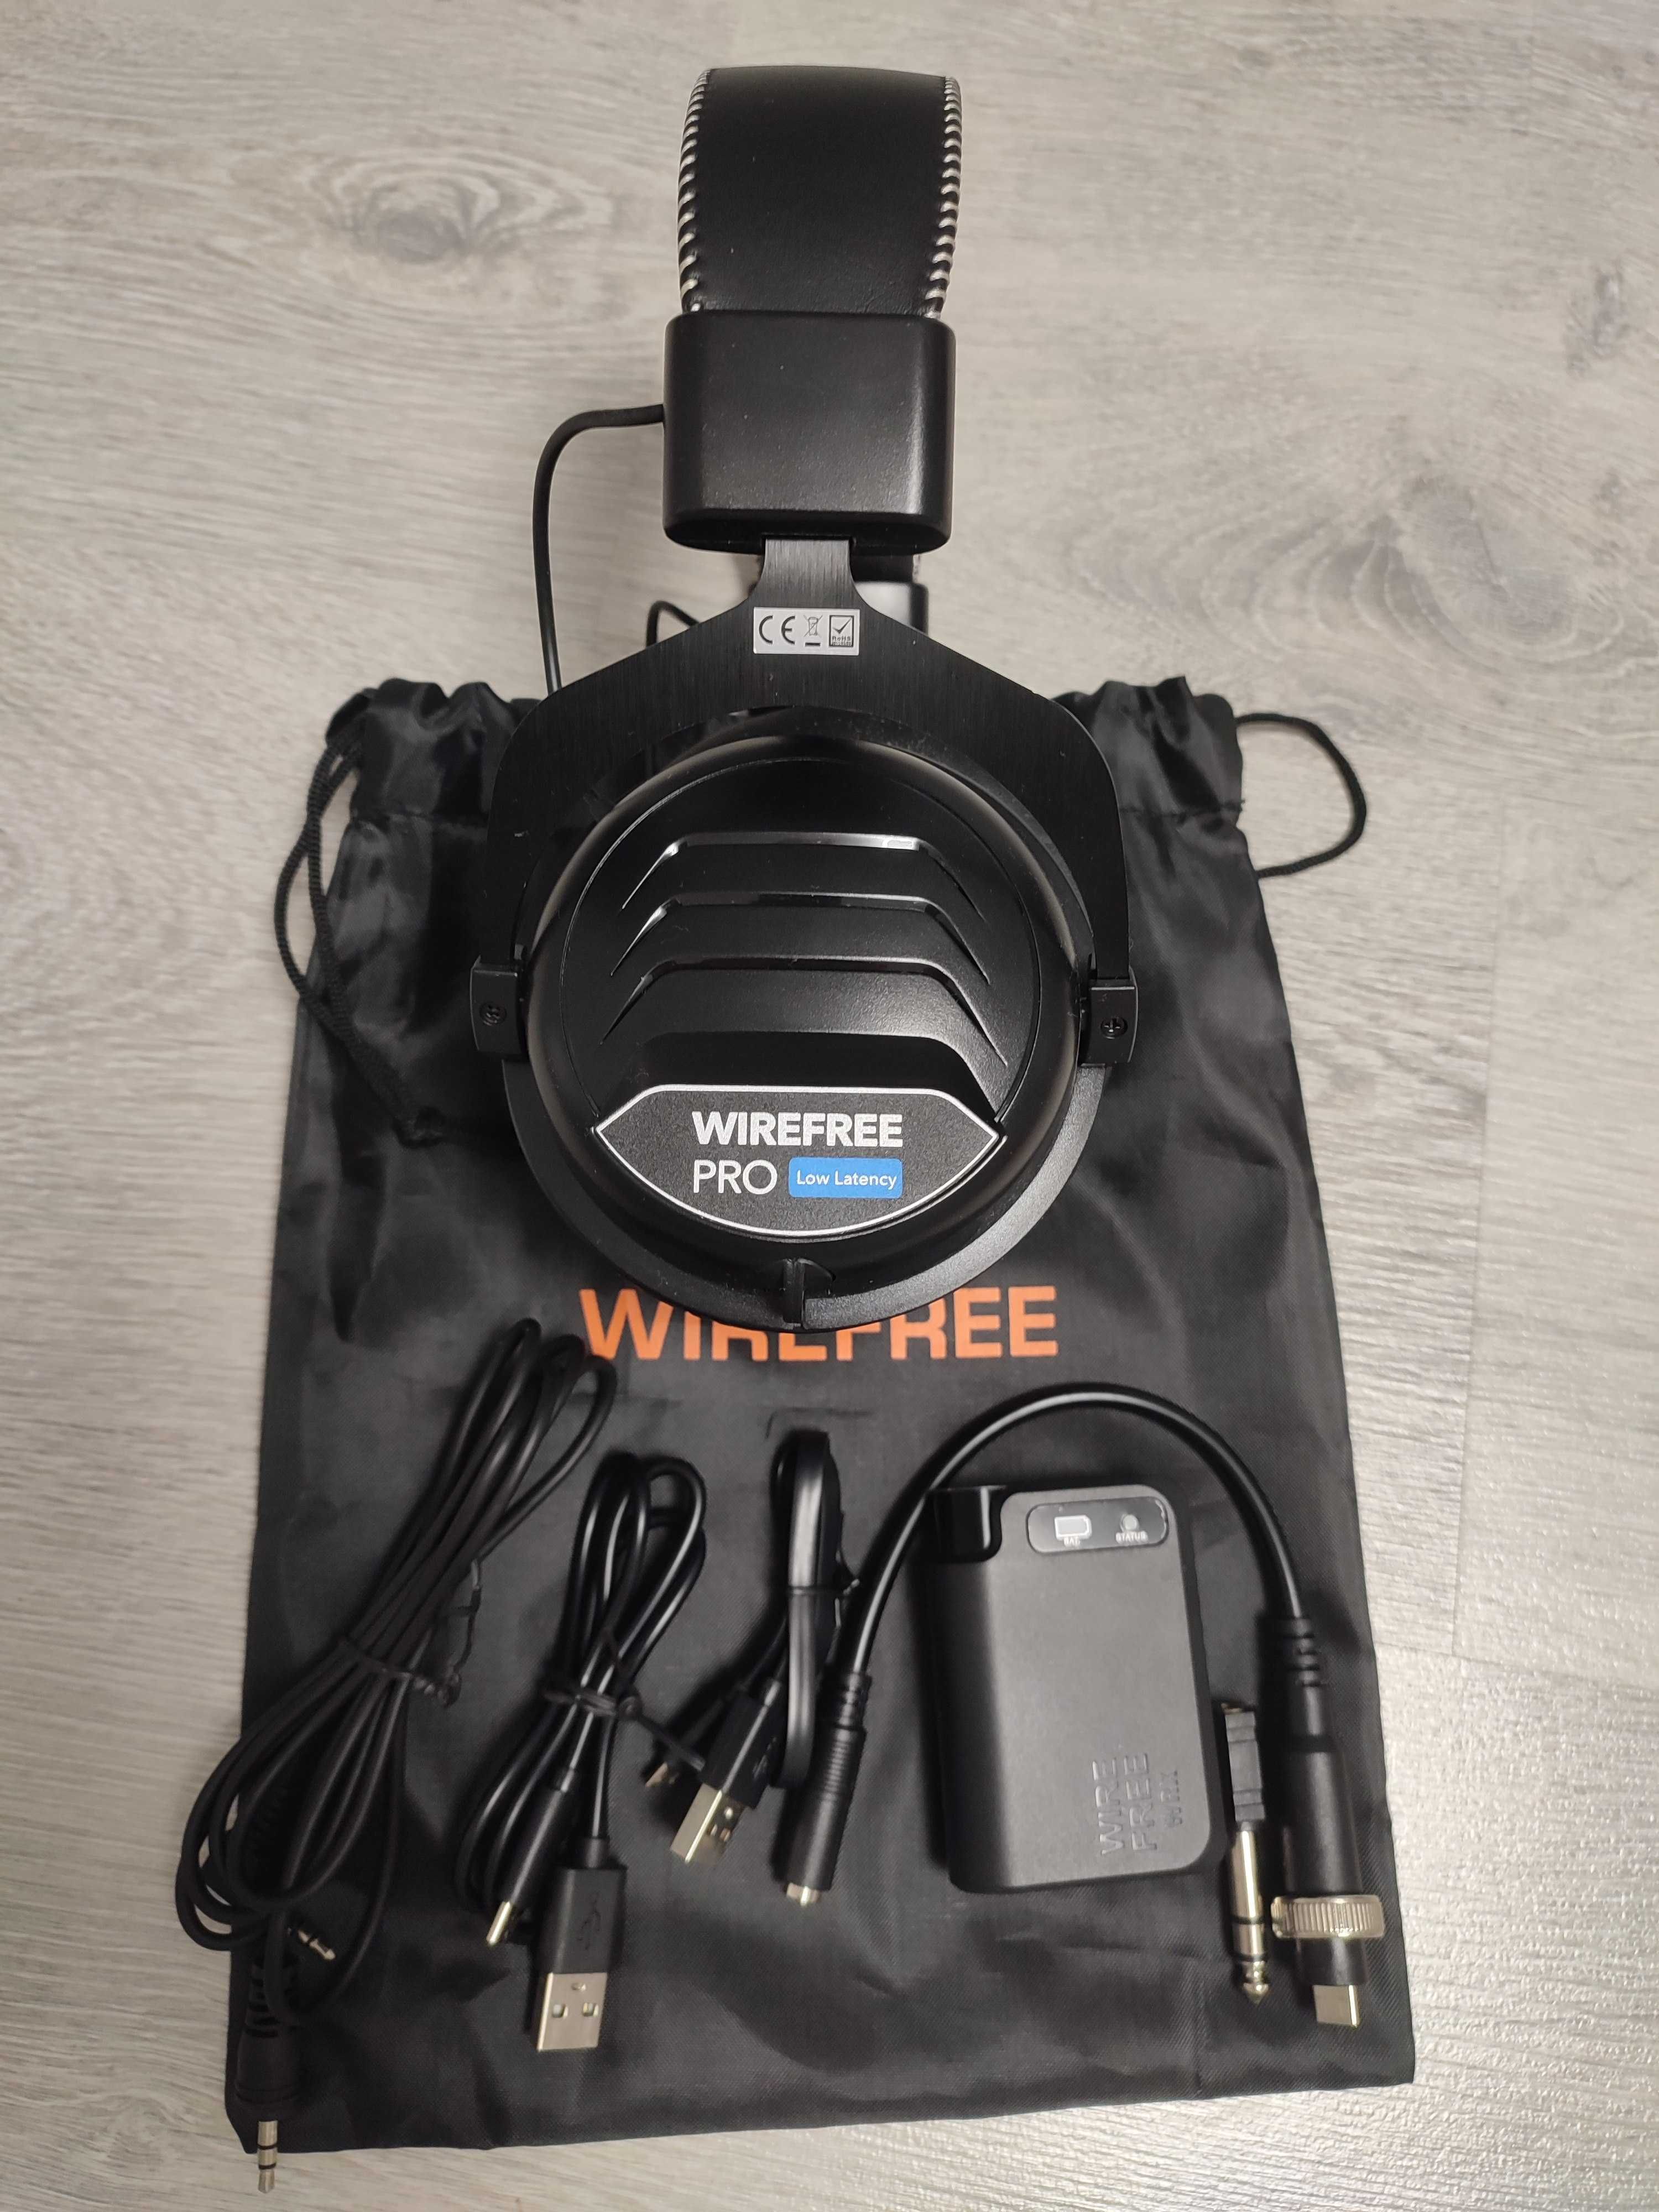 Безпроводні навушники Quest wire free pro headphones